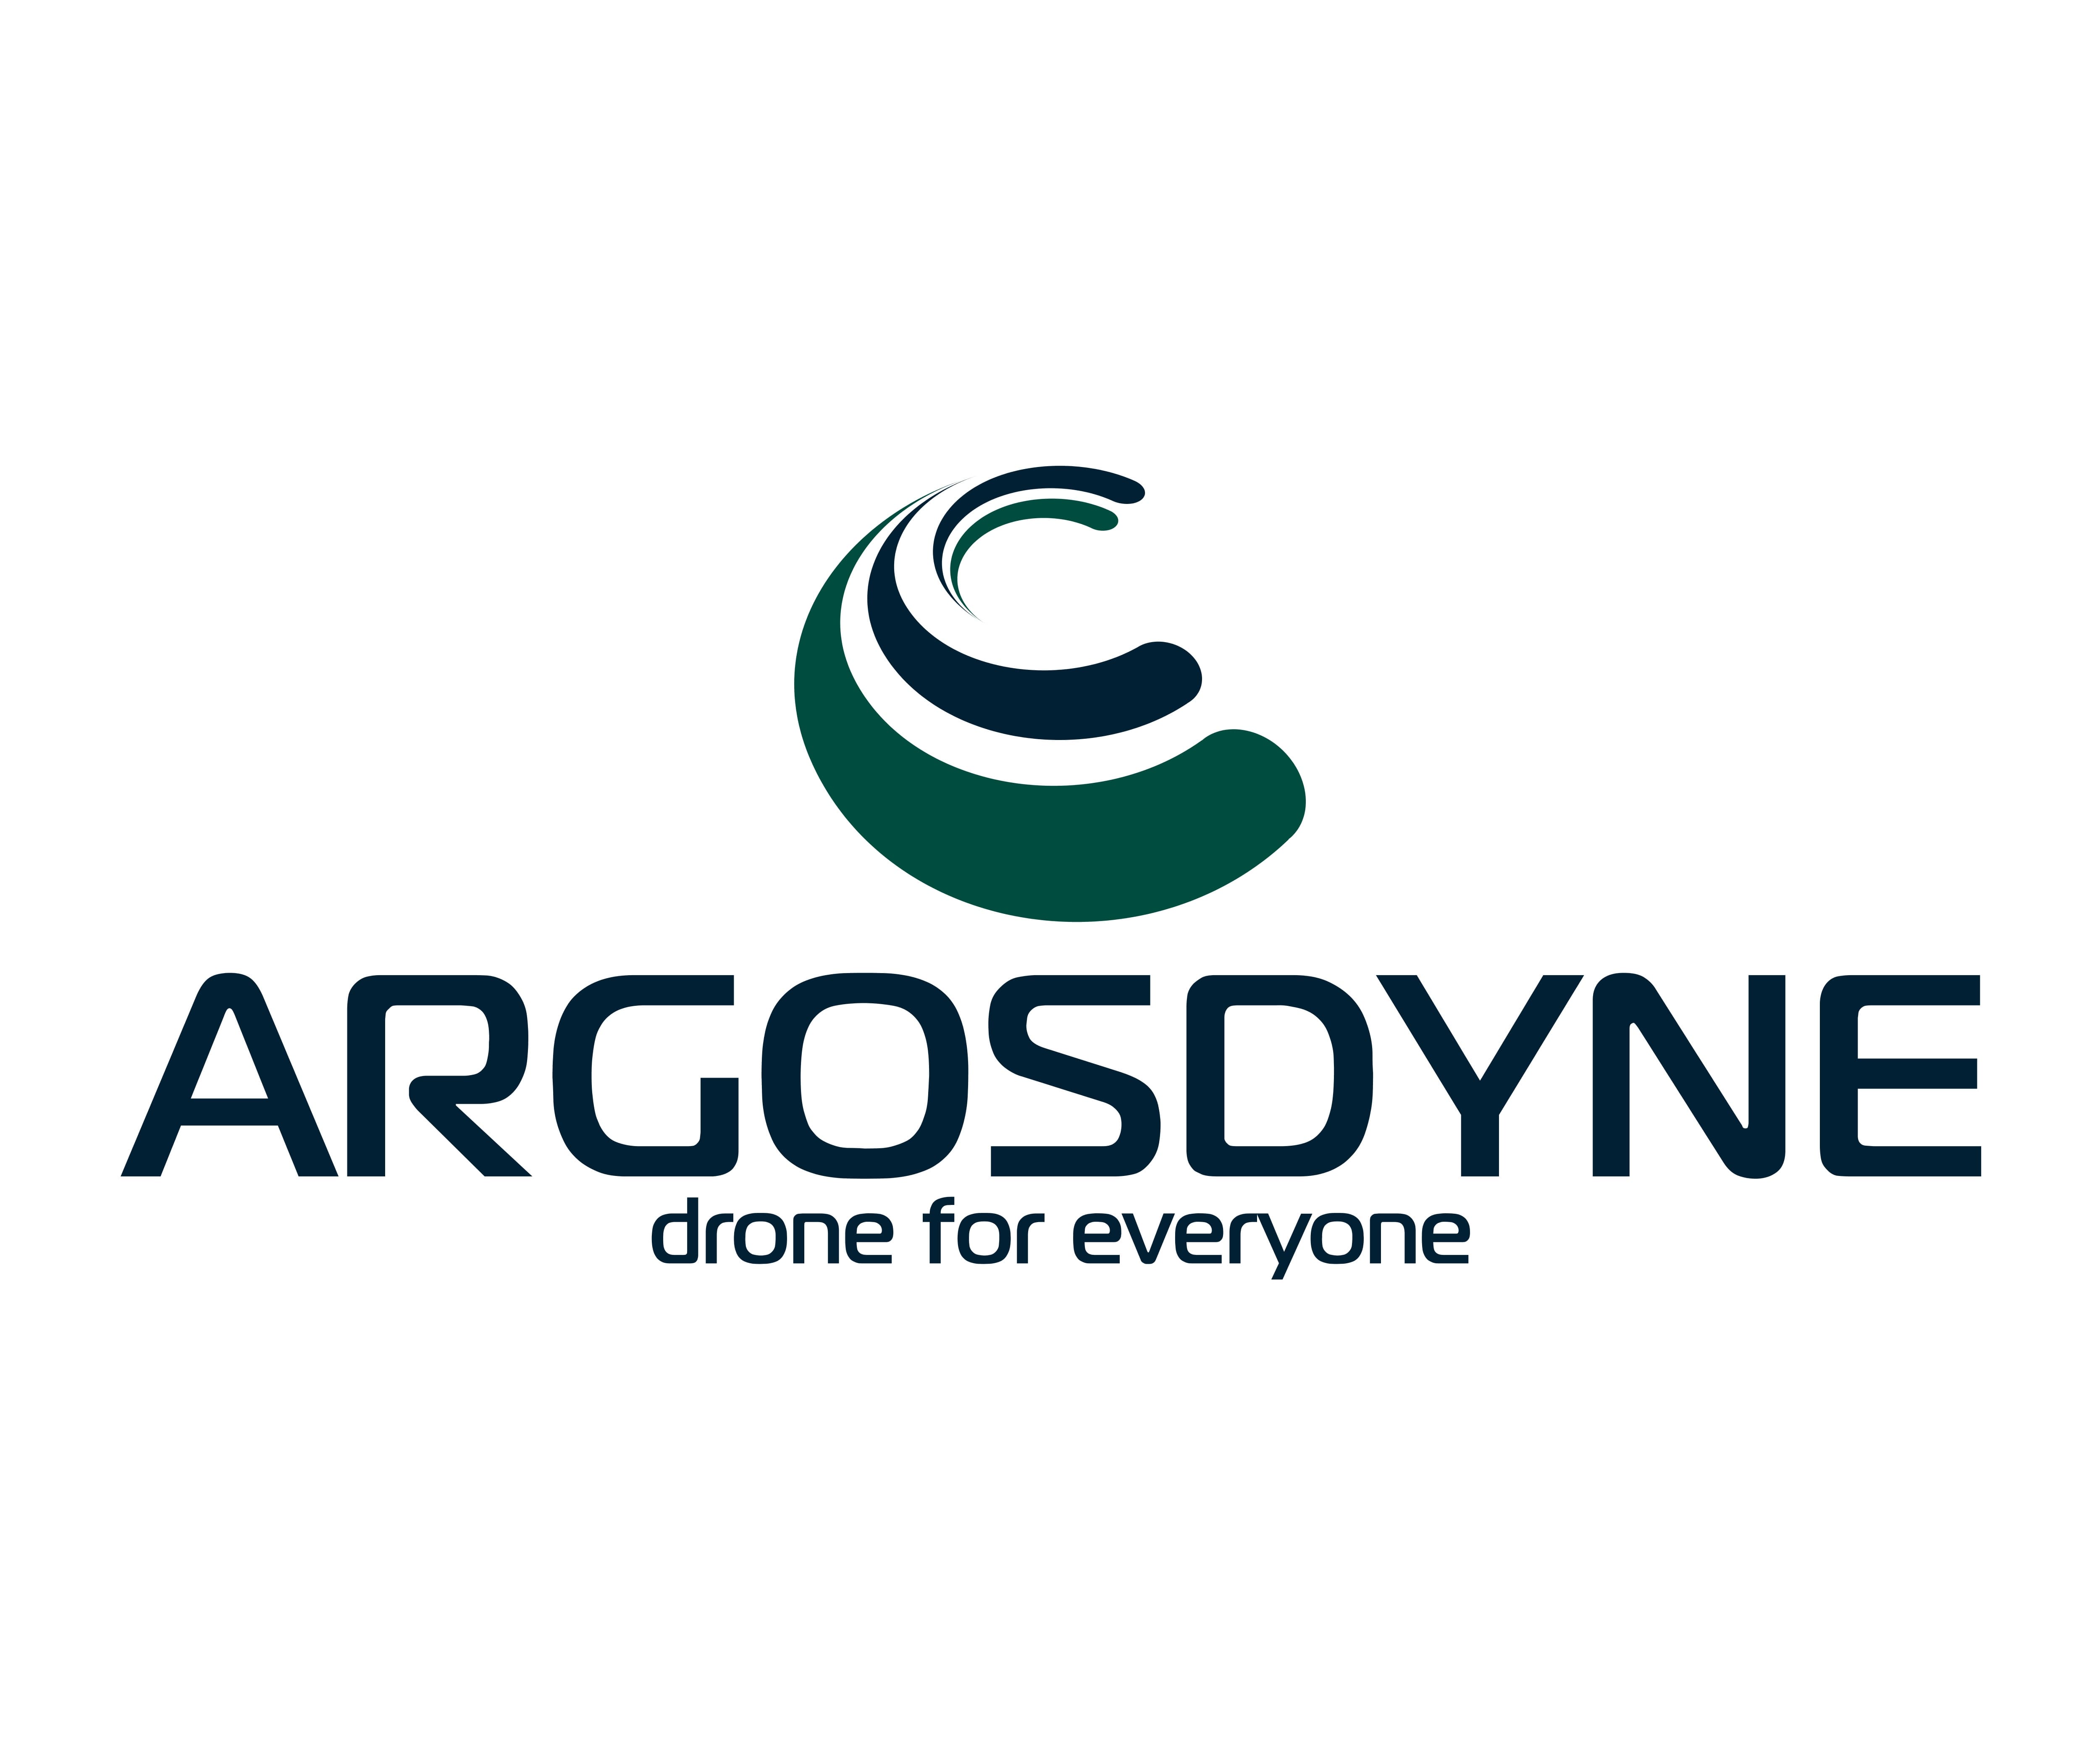  Argosdyne Co., Ltd.